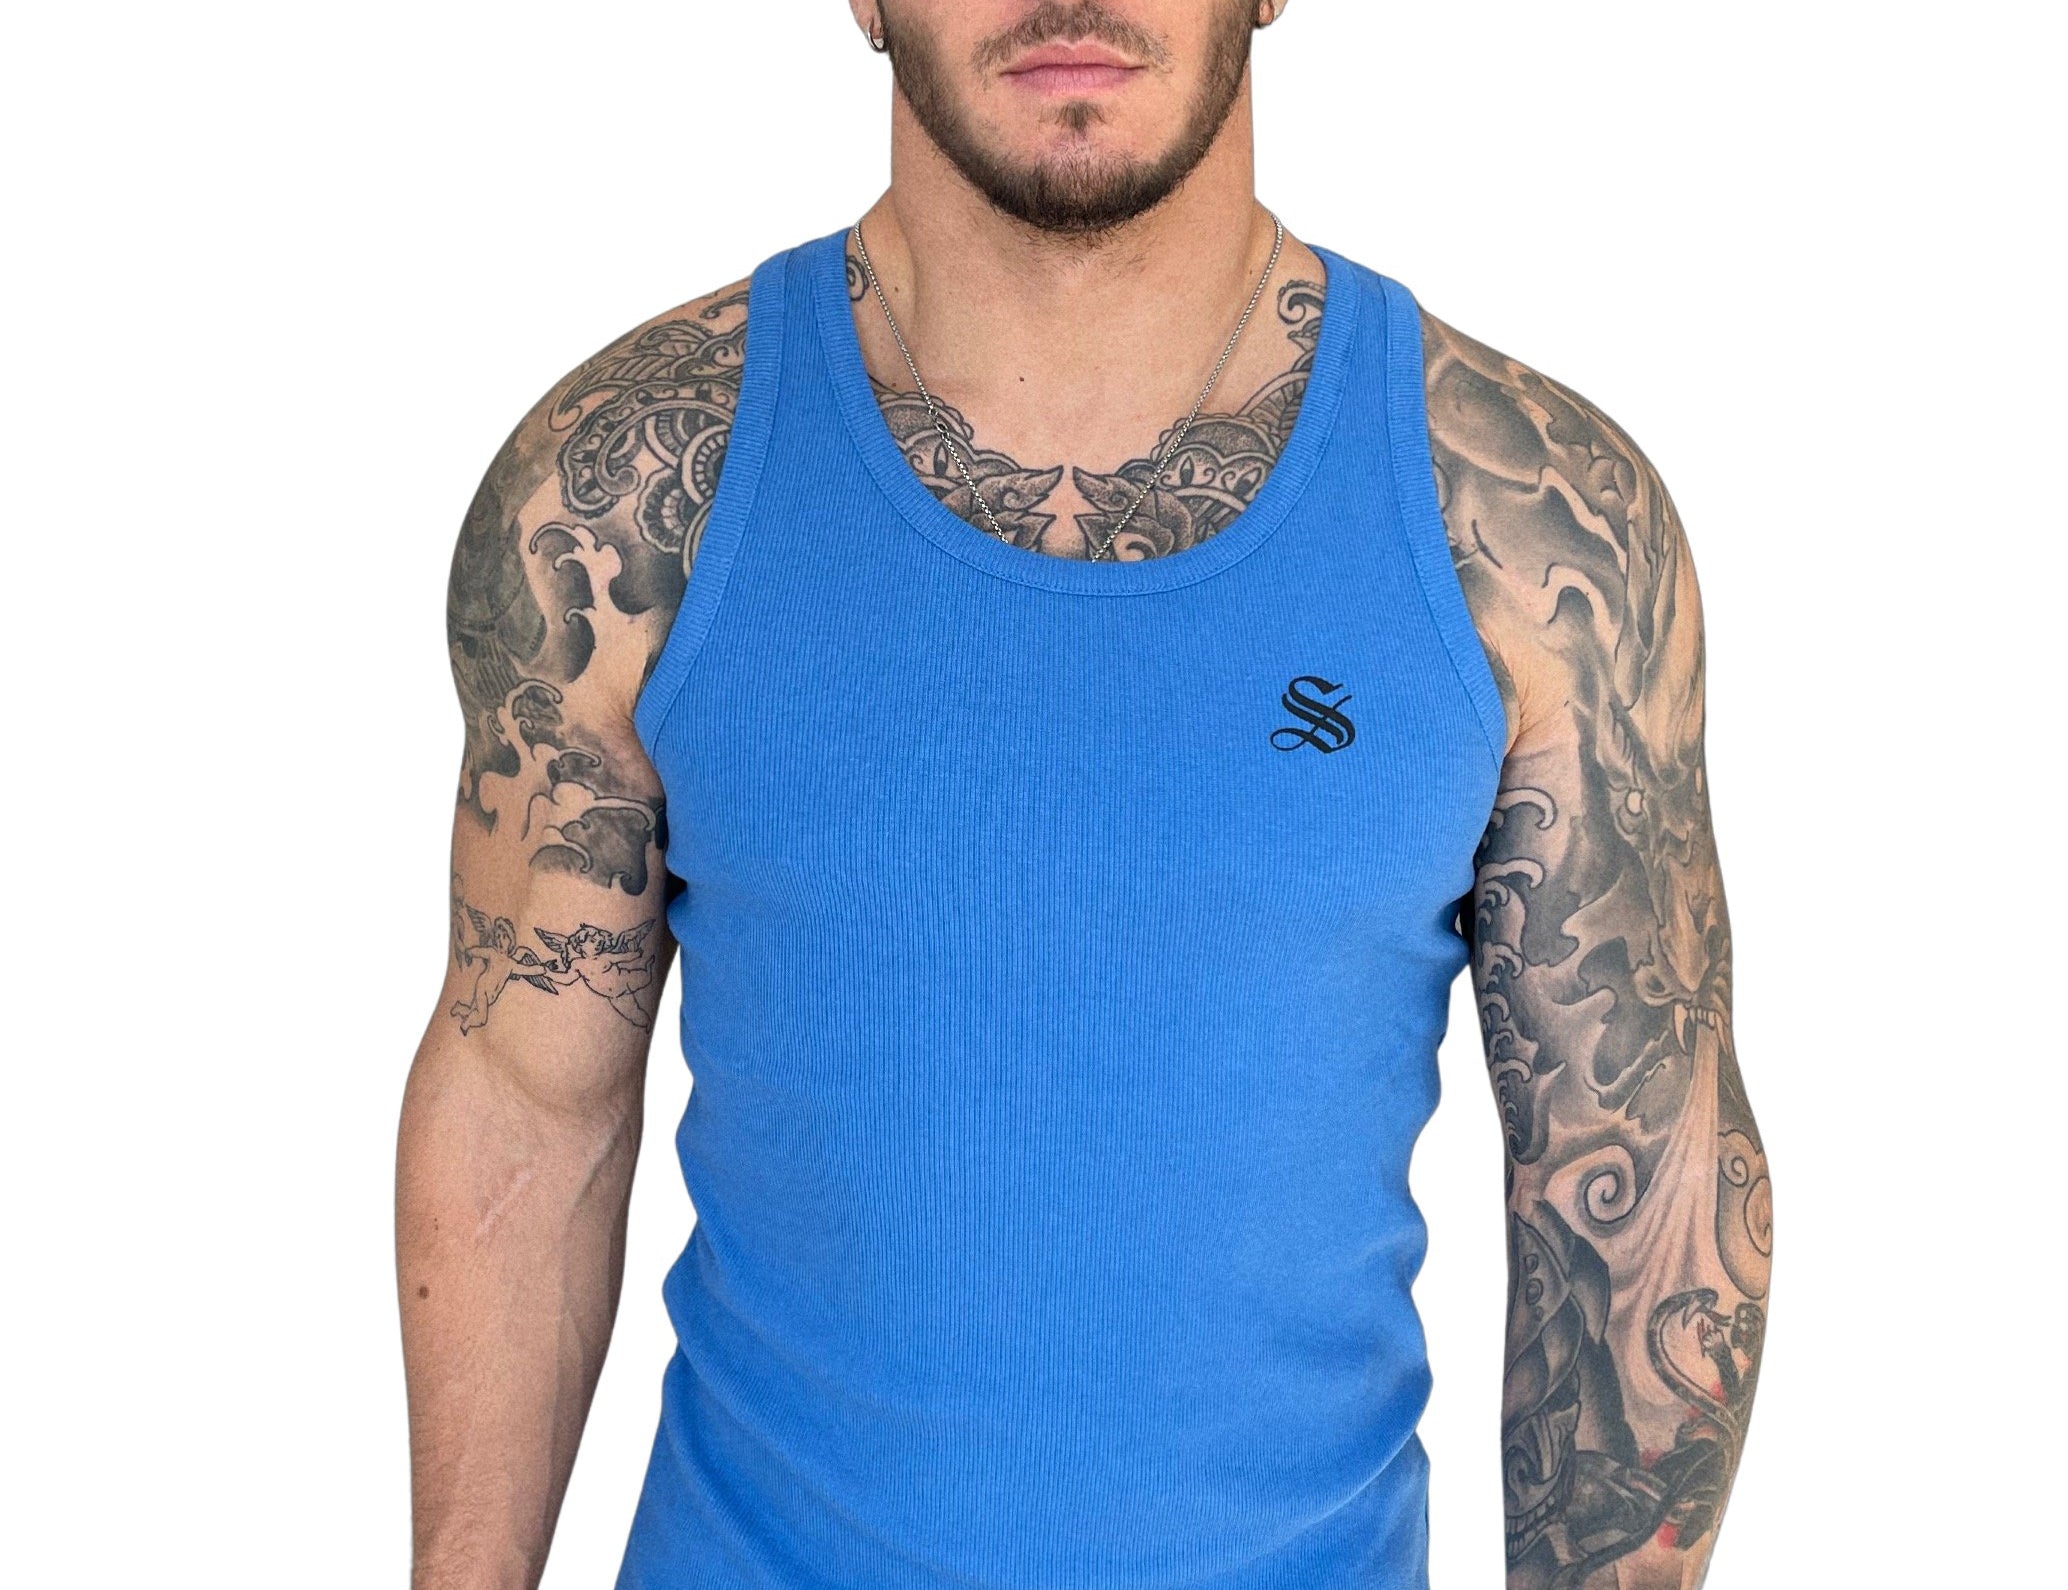 Aurolania - Blue Tank Top for Men - Sarman Fashion - Wholesale Clothing Fashion Brand for Men from Canada